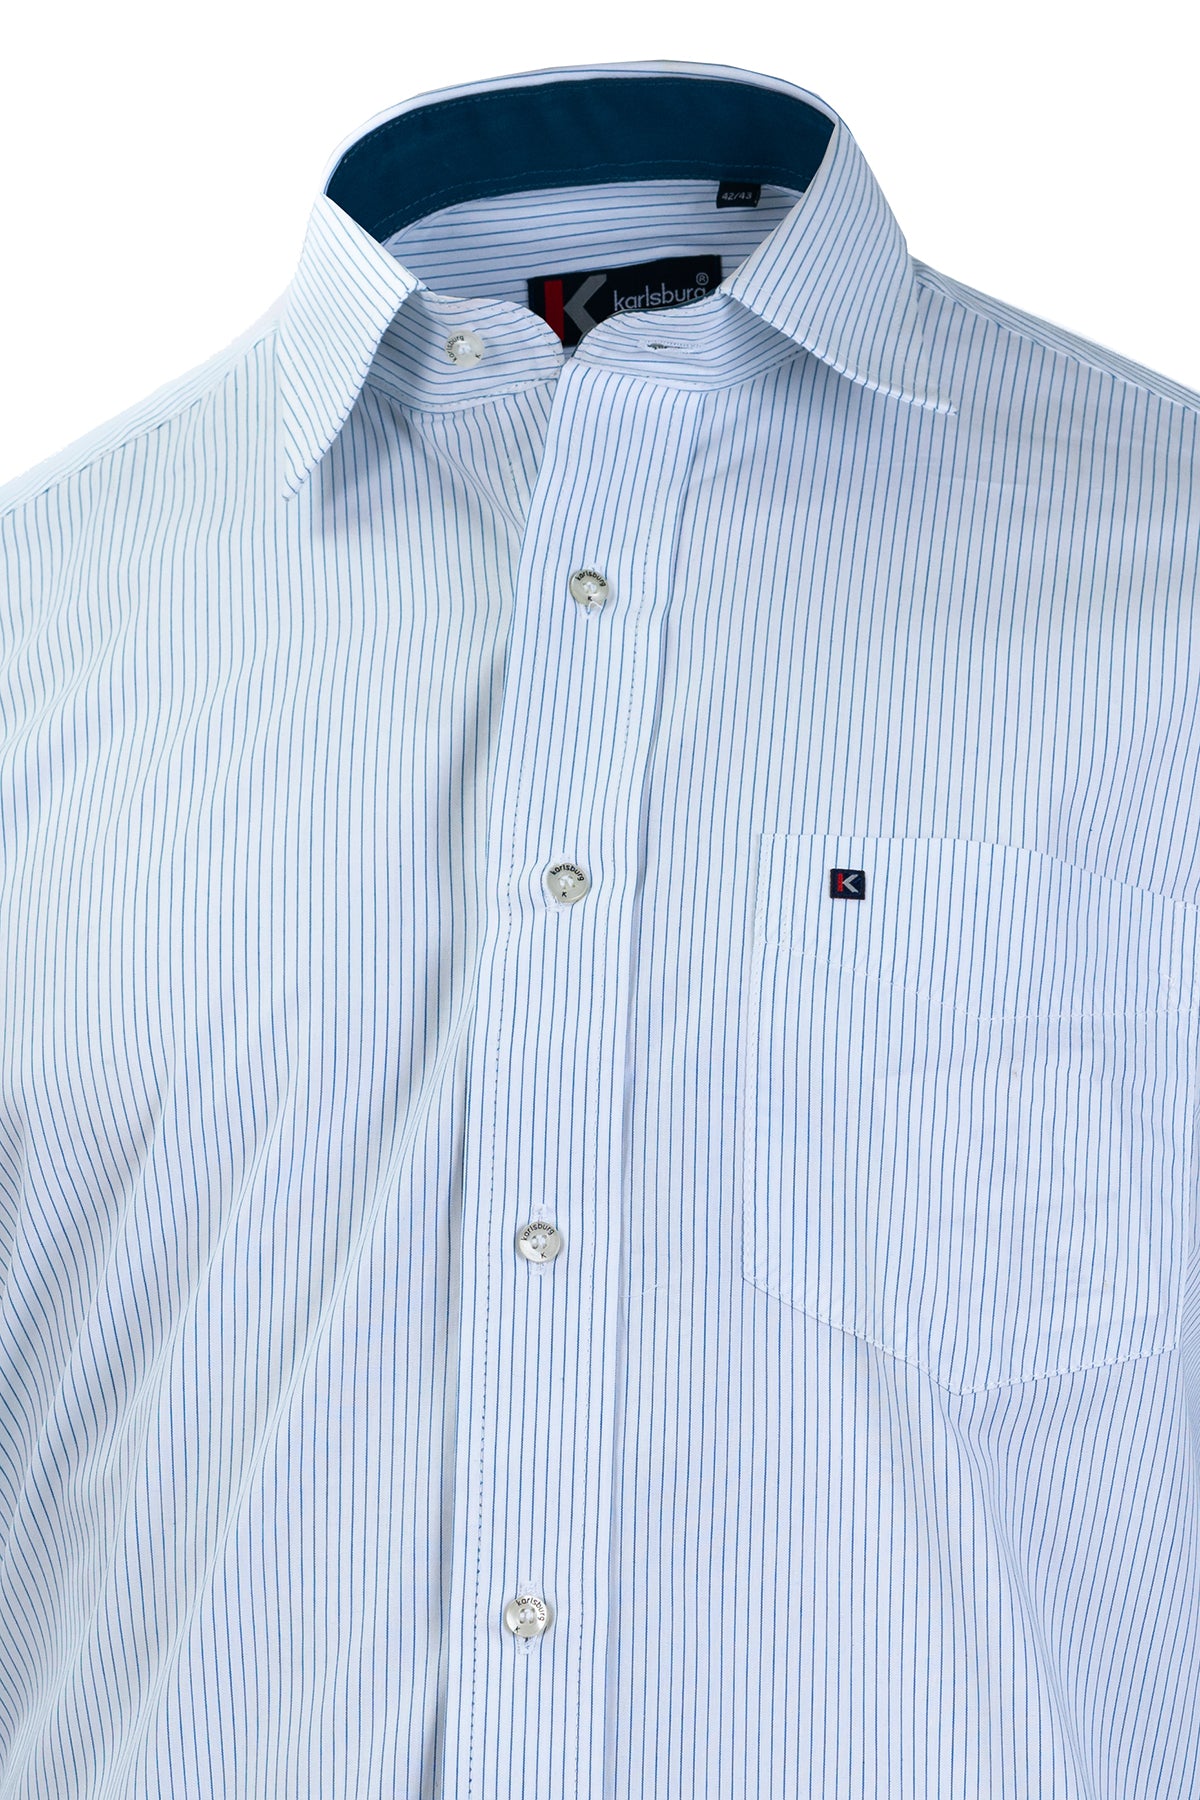 Men's Blue White Striped Slim Fit Shirt